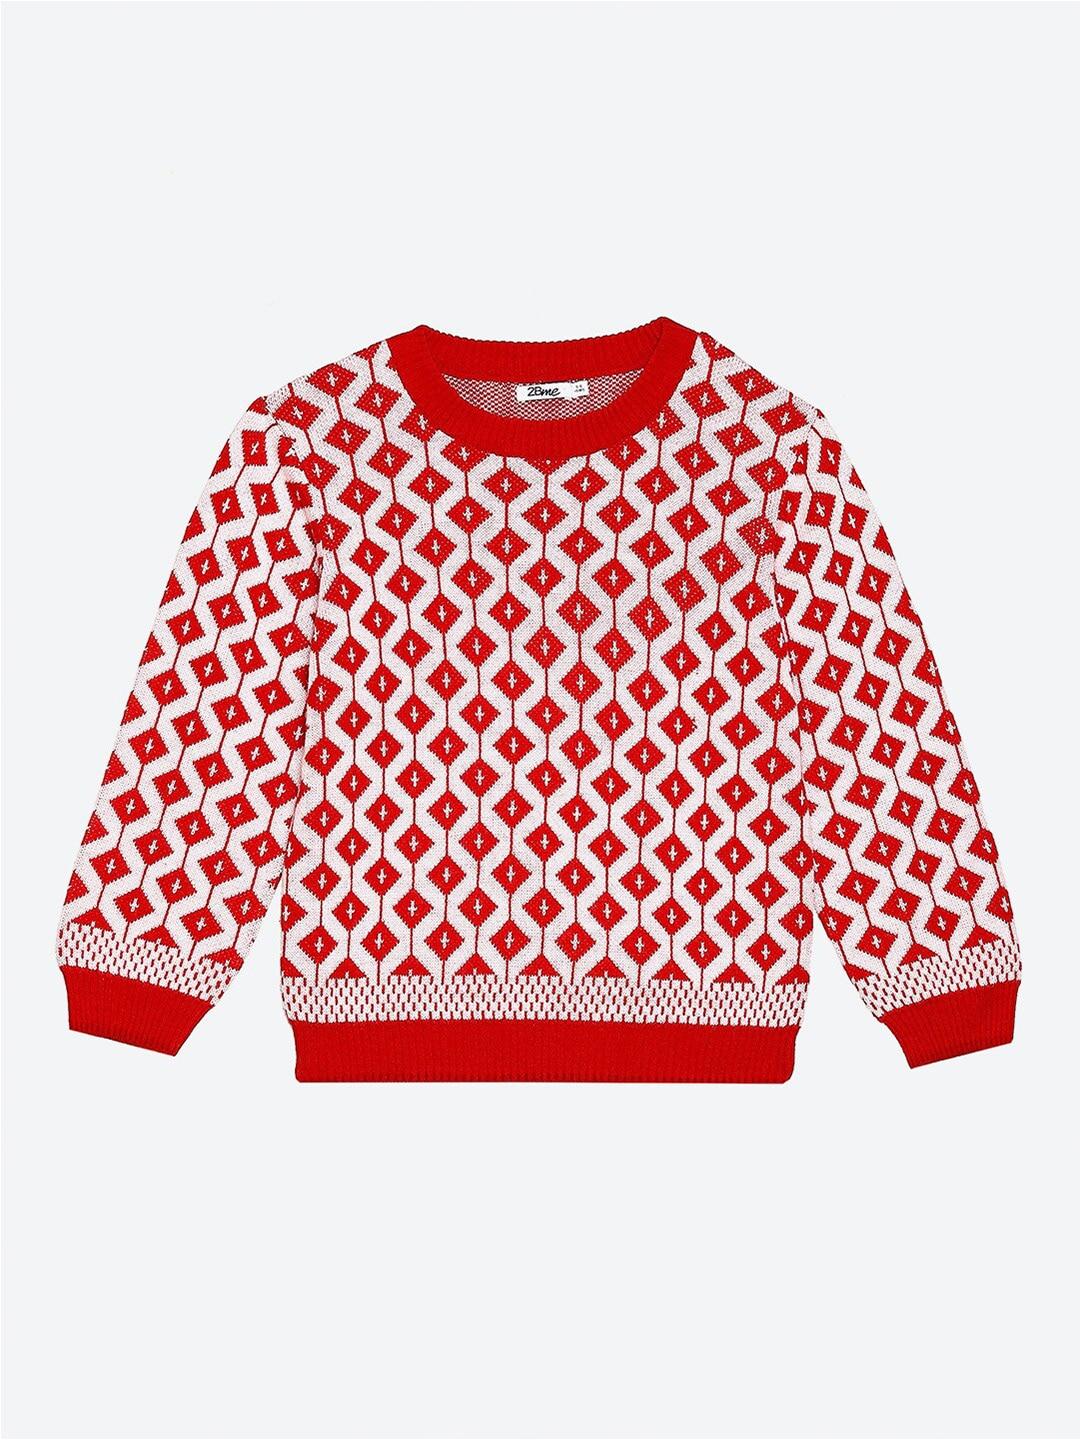 2bme boys geometric printed acrylic pullover sweater